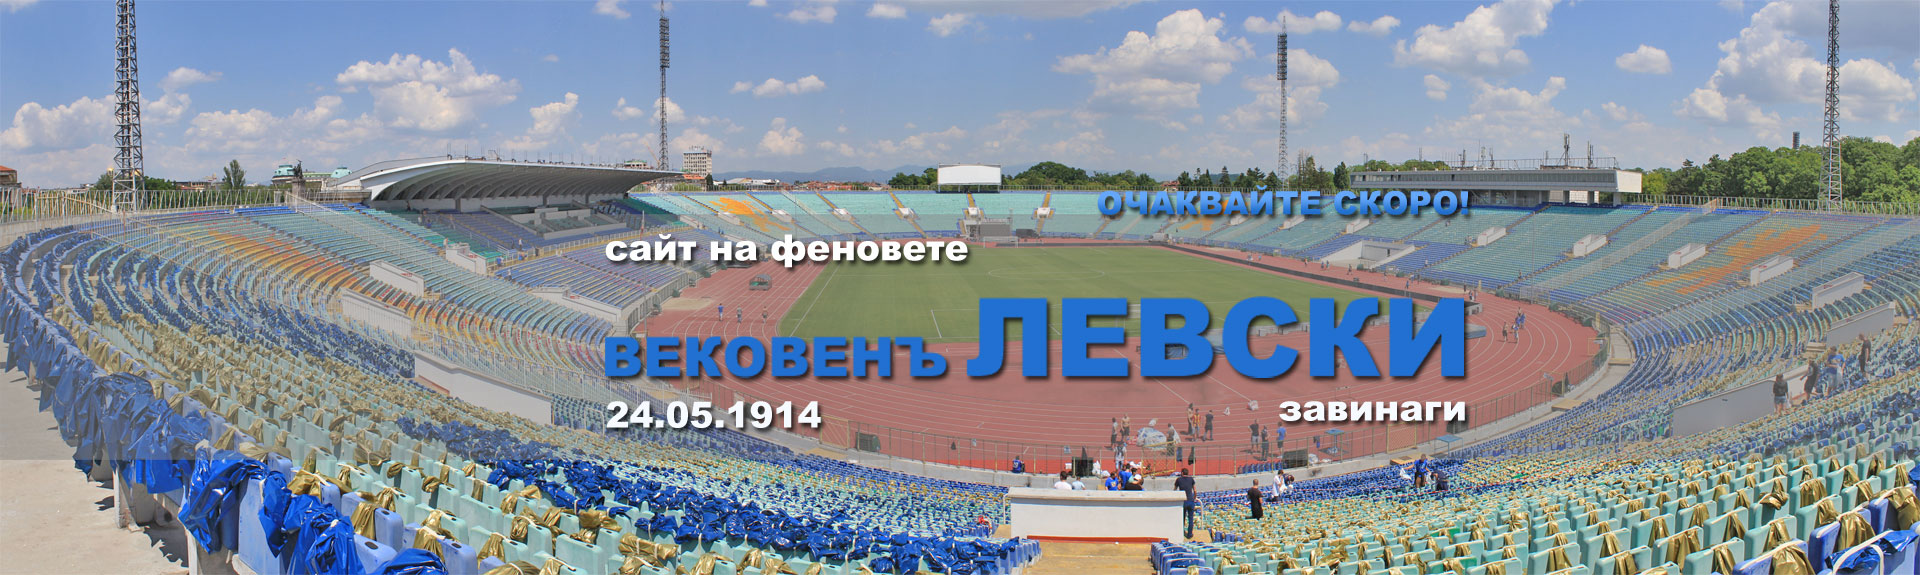 Levski 100 years